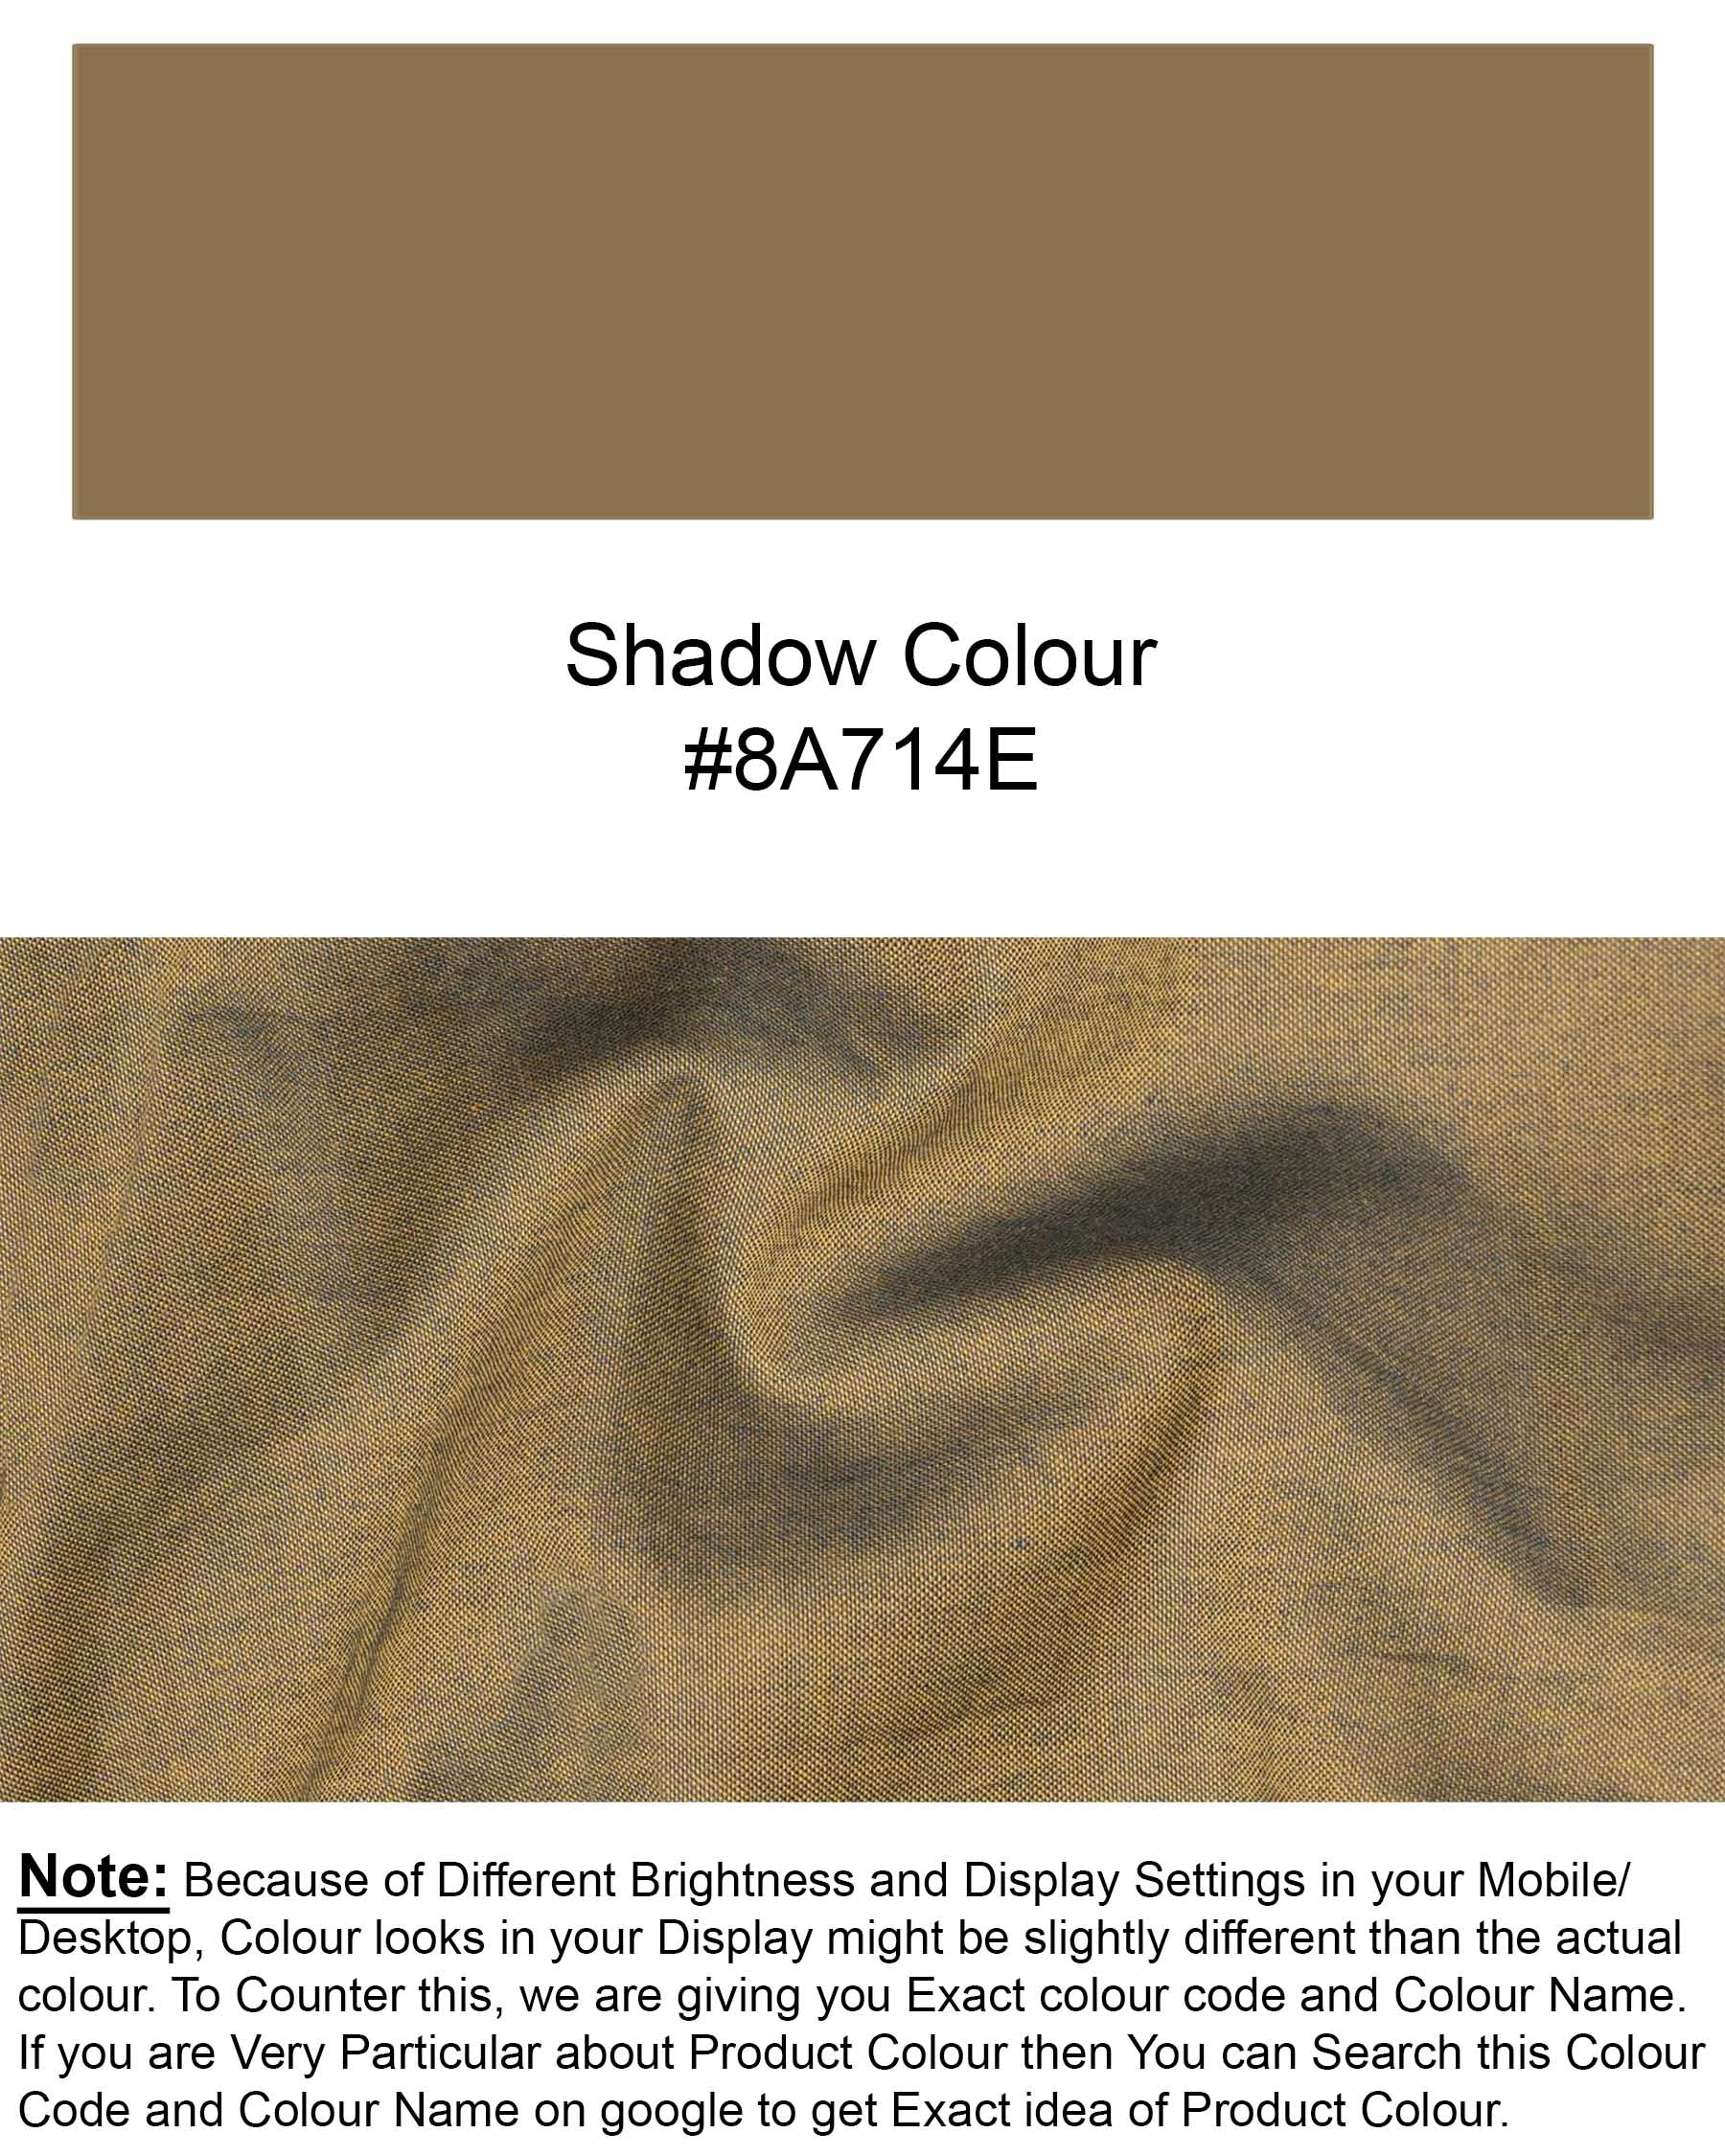 Shadow Brown Royal Oxford Shirt 6400-38, 6400-H-38, 6400-39, 6400-H-39, 6400-40, 6400-H-40, 6400-42, 6400-H-42, 6400-44, 6400-H-44, 6400-46, 6400-H-46, 6400-48, 6400-H-48, 6400-50, 6400-H-50, 6400-52, 6400-H-52